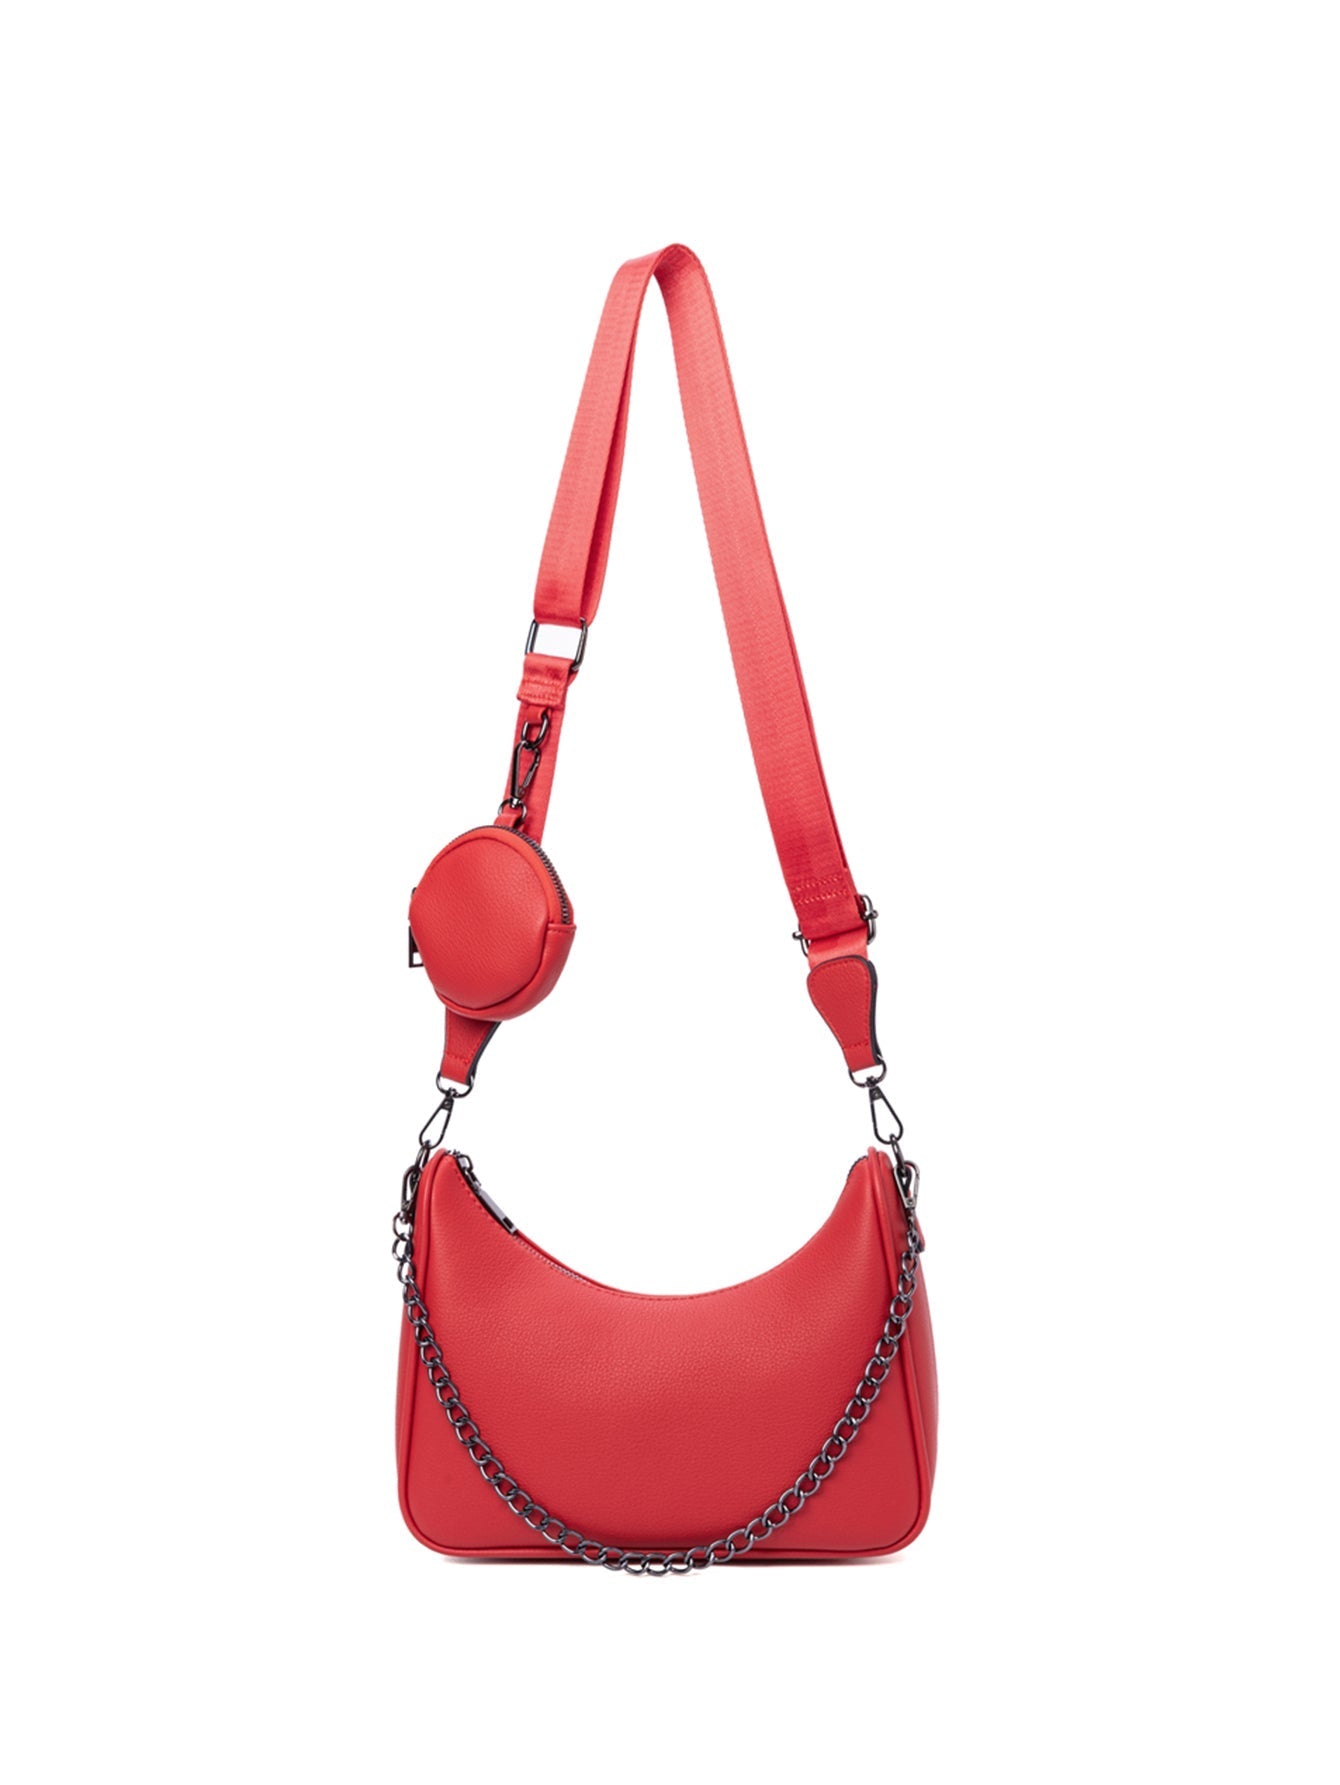 Small Crossbody Handbags For Women Multipurpose Soft Shoulder